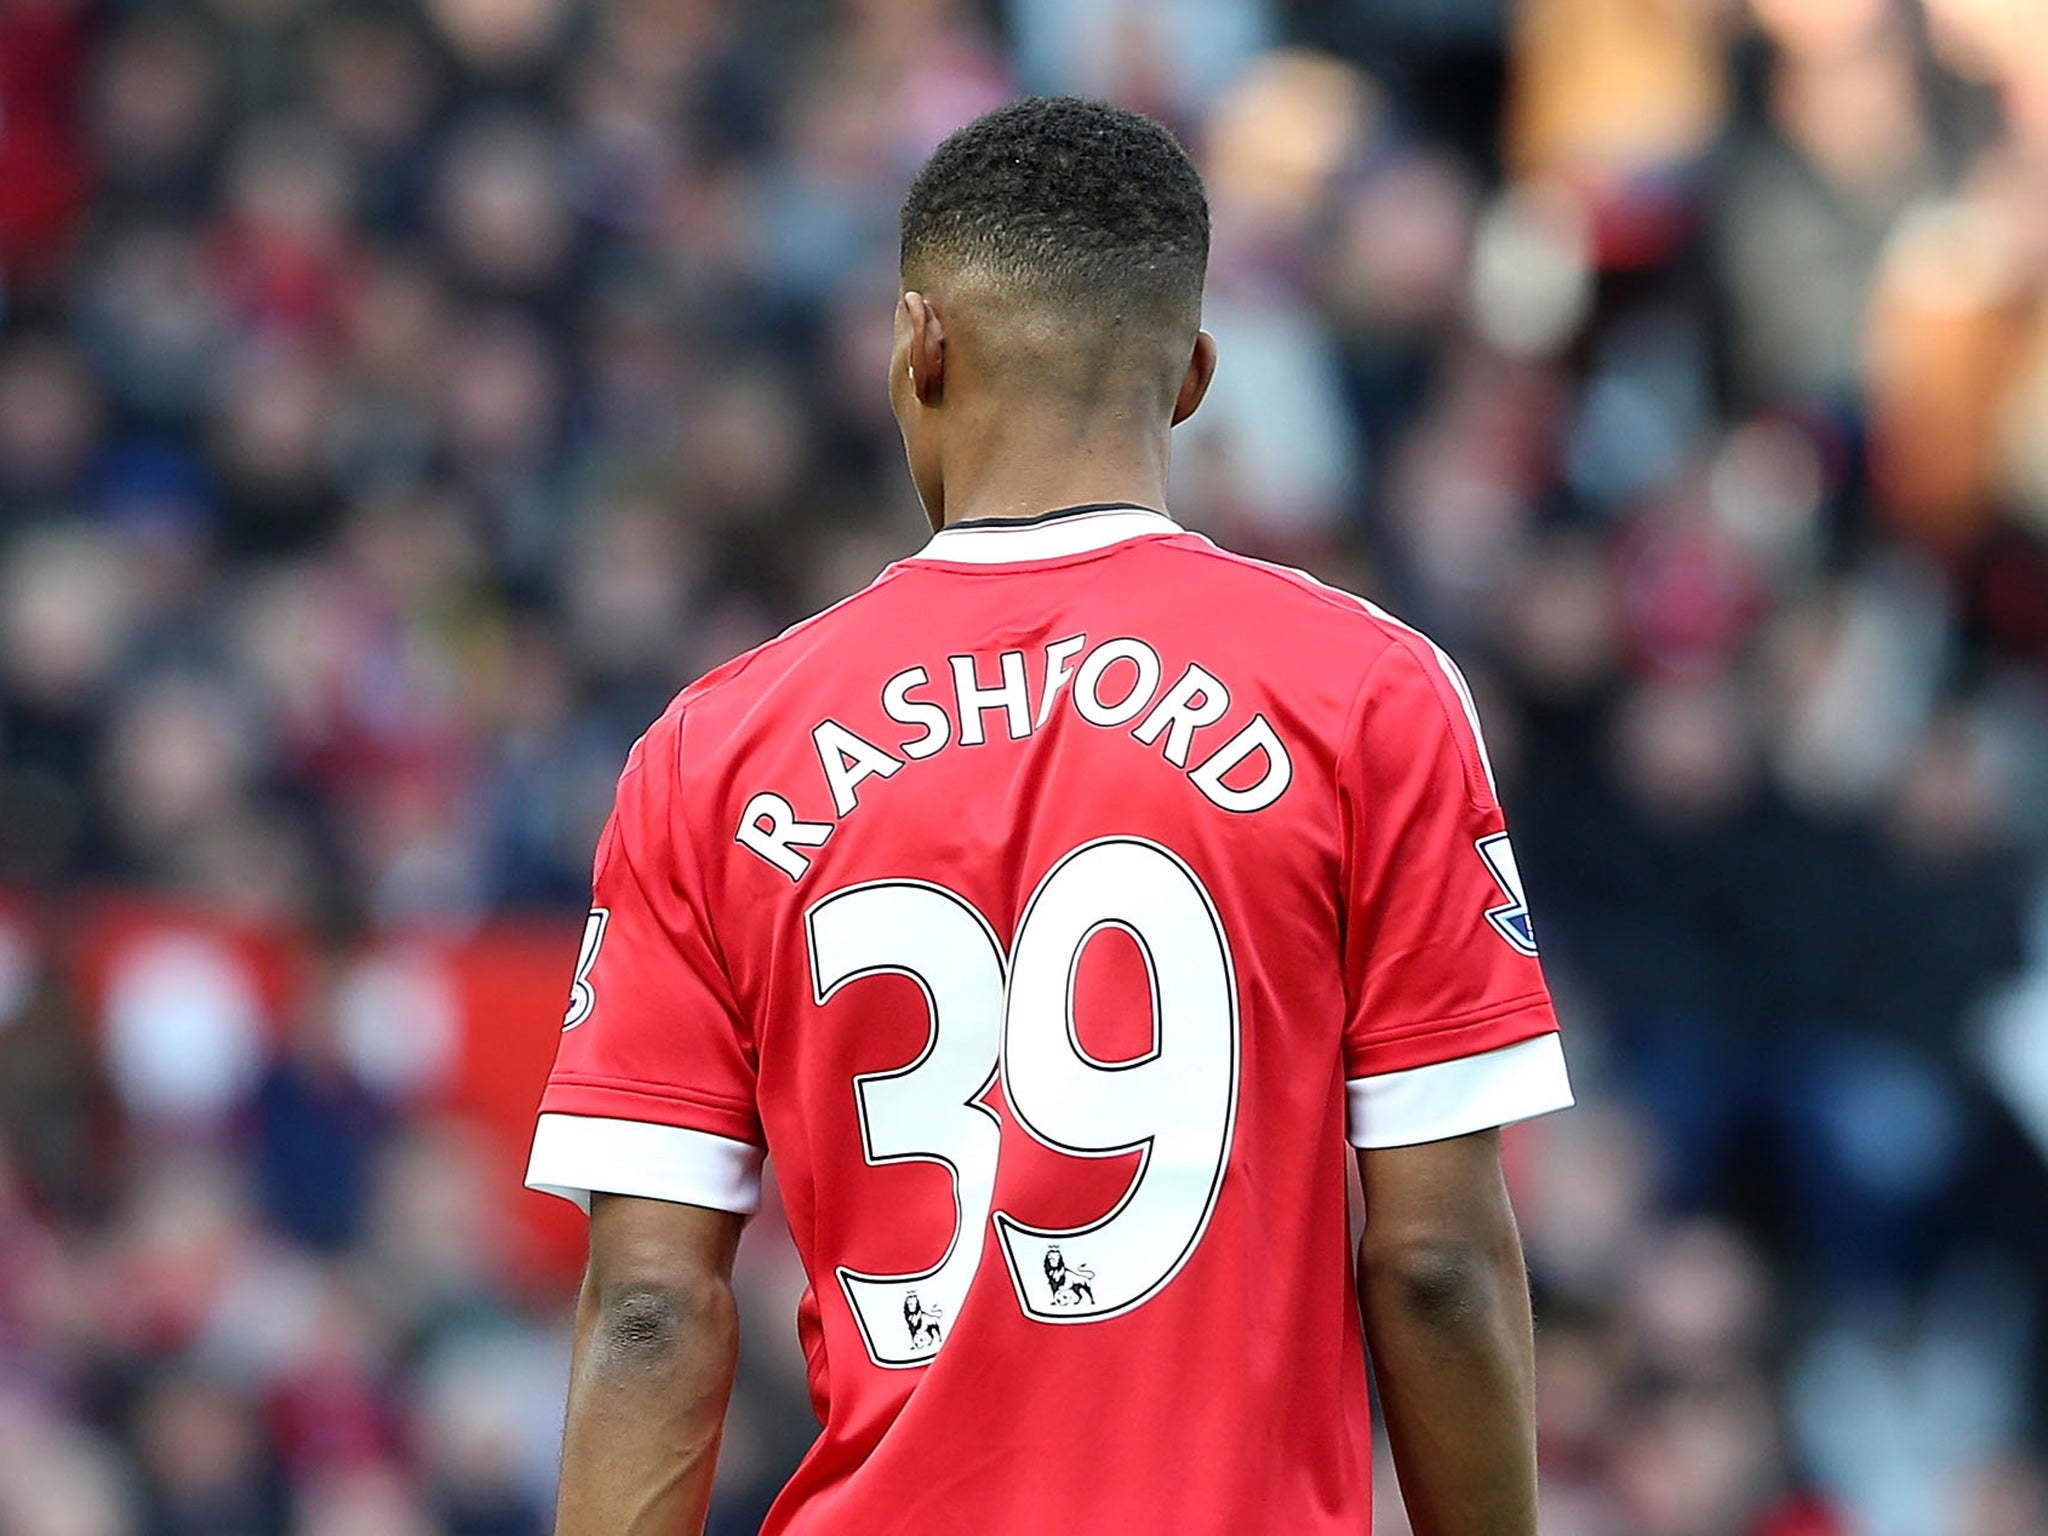 Manchester United's 18-year-old striker Marcus Rashford scored twice